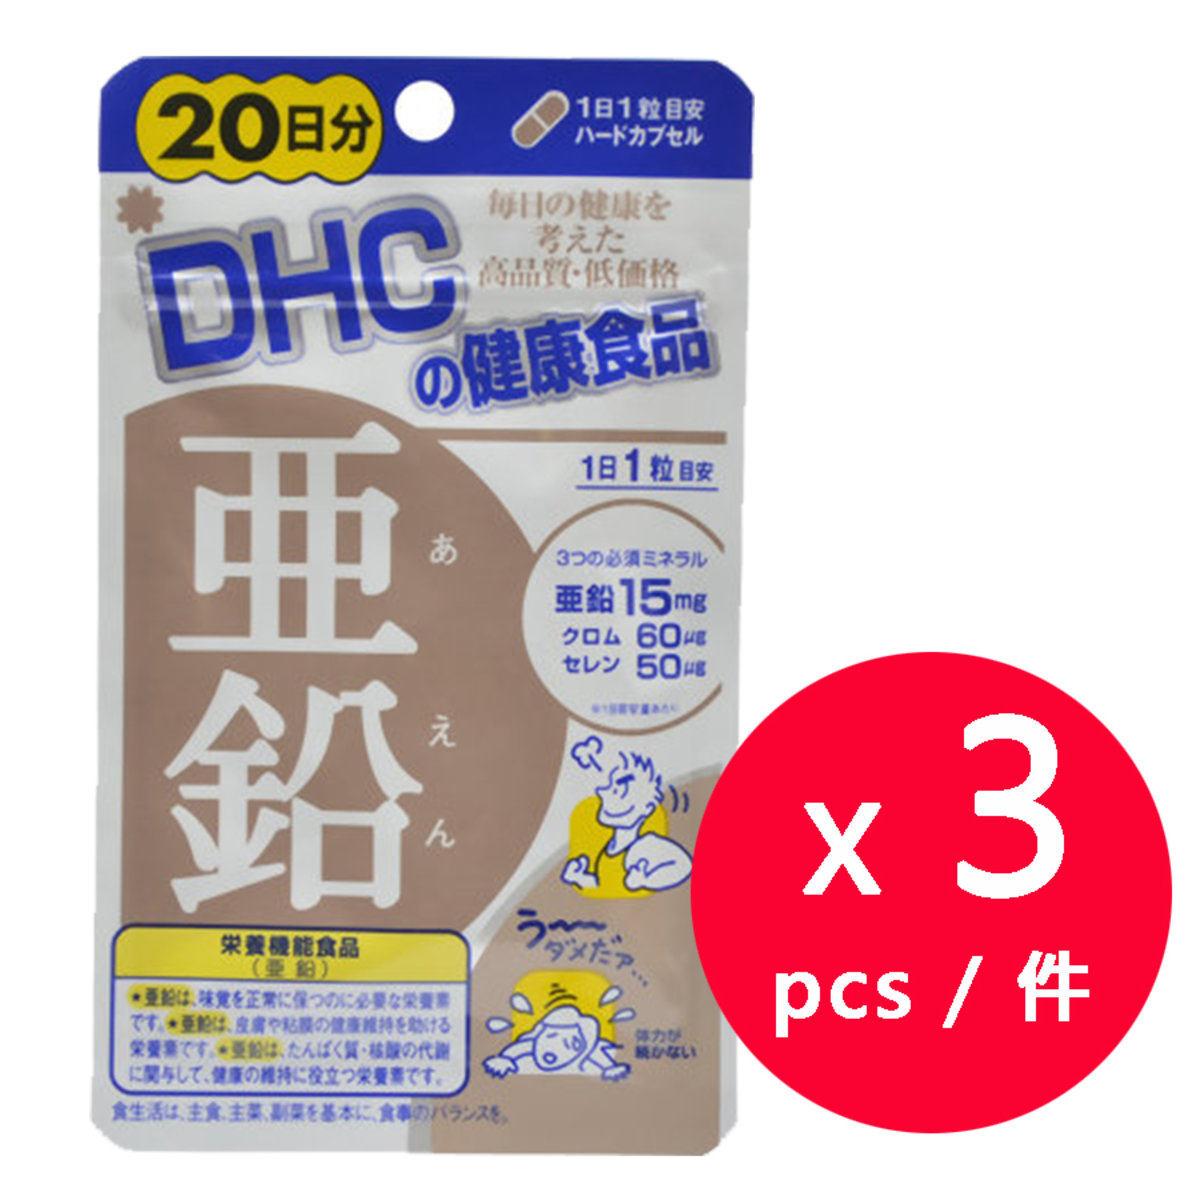 Dhc Dhc 亞鉛活力鋅元素 日份量 粒x 3包 平行進口 Hktvmall 香港最大網購平台